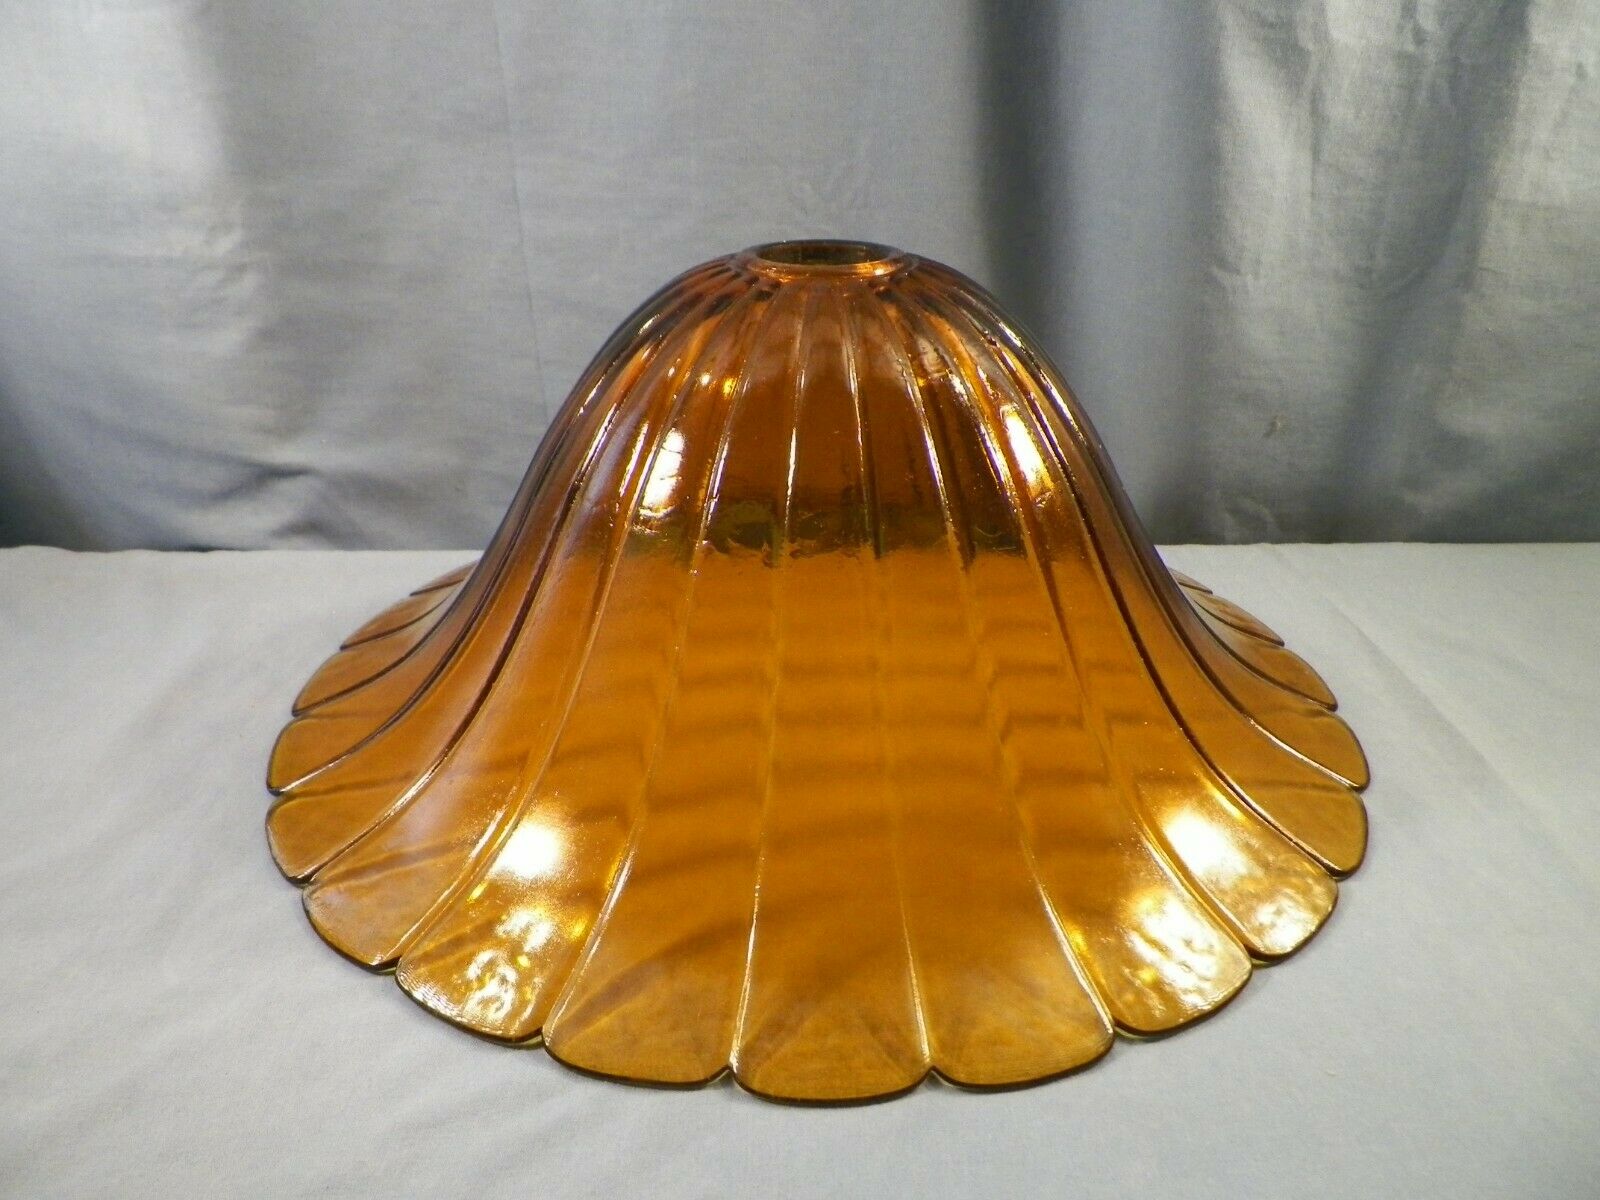 Nos Brooke Crescent Large Amber Glass Lamp Shade Wide Ribbed Design 15 1/2" Wide